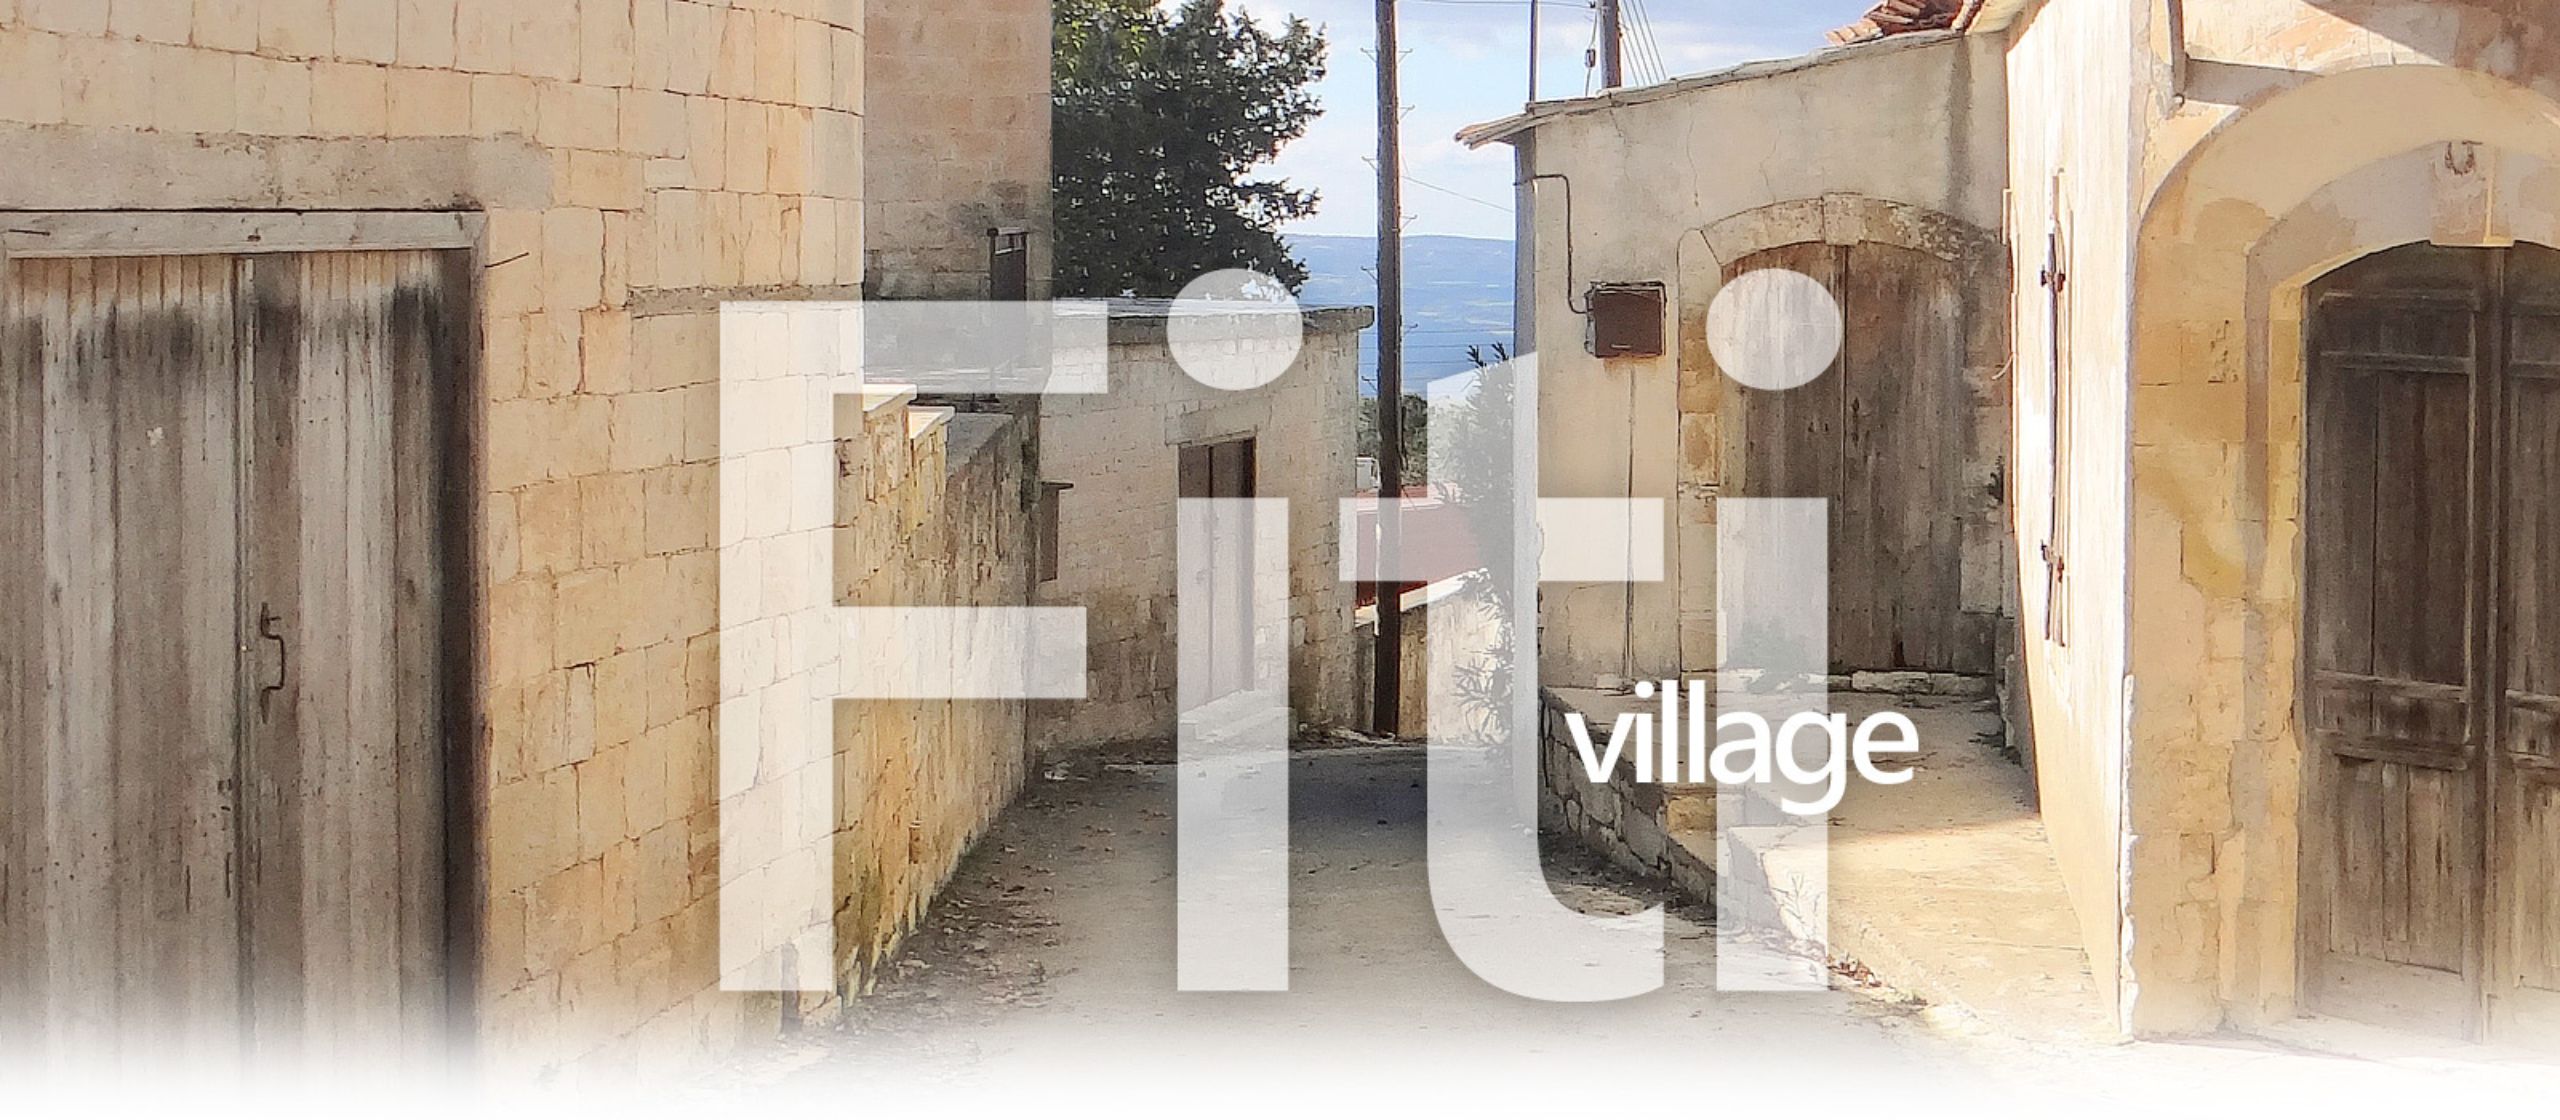 Fiti Village in Cyprus